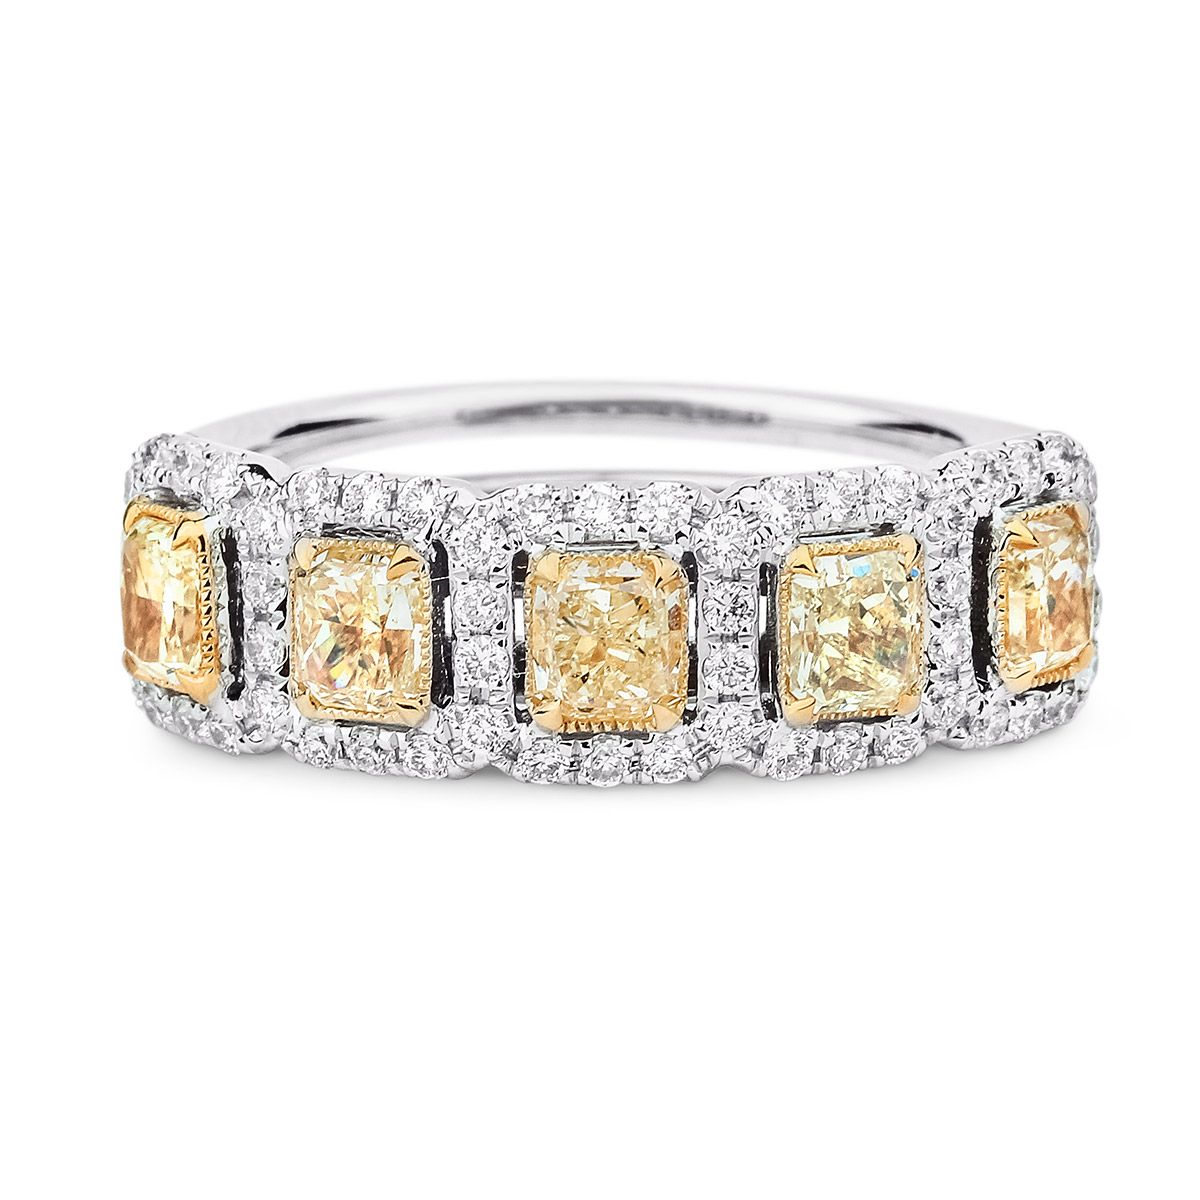 Fancy Intense Yellow Diamond Ring, 2.15 Ct. TW, Radiant shape